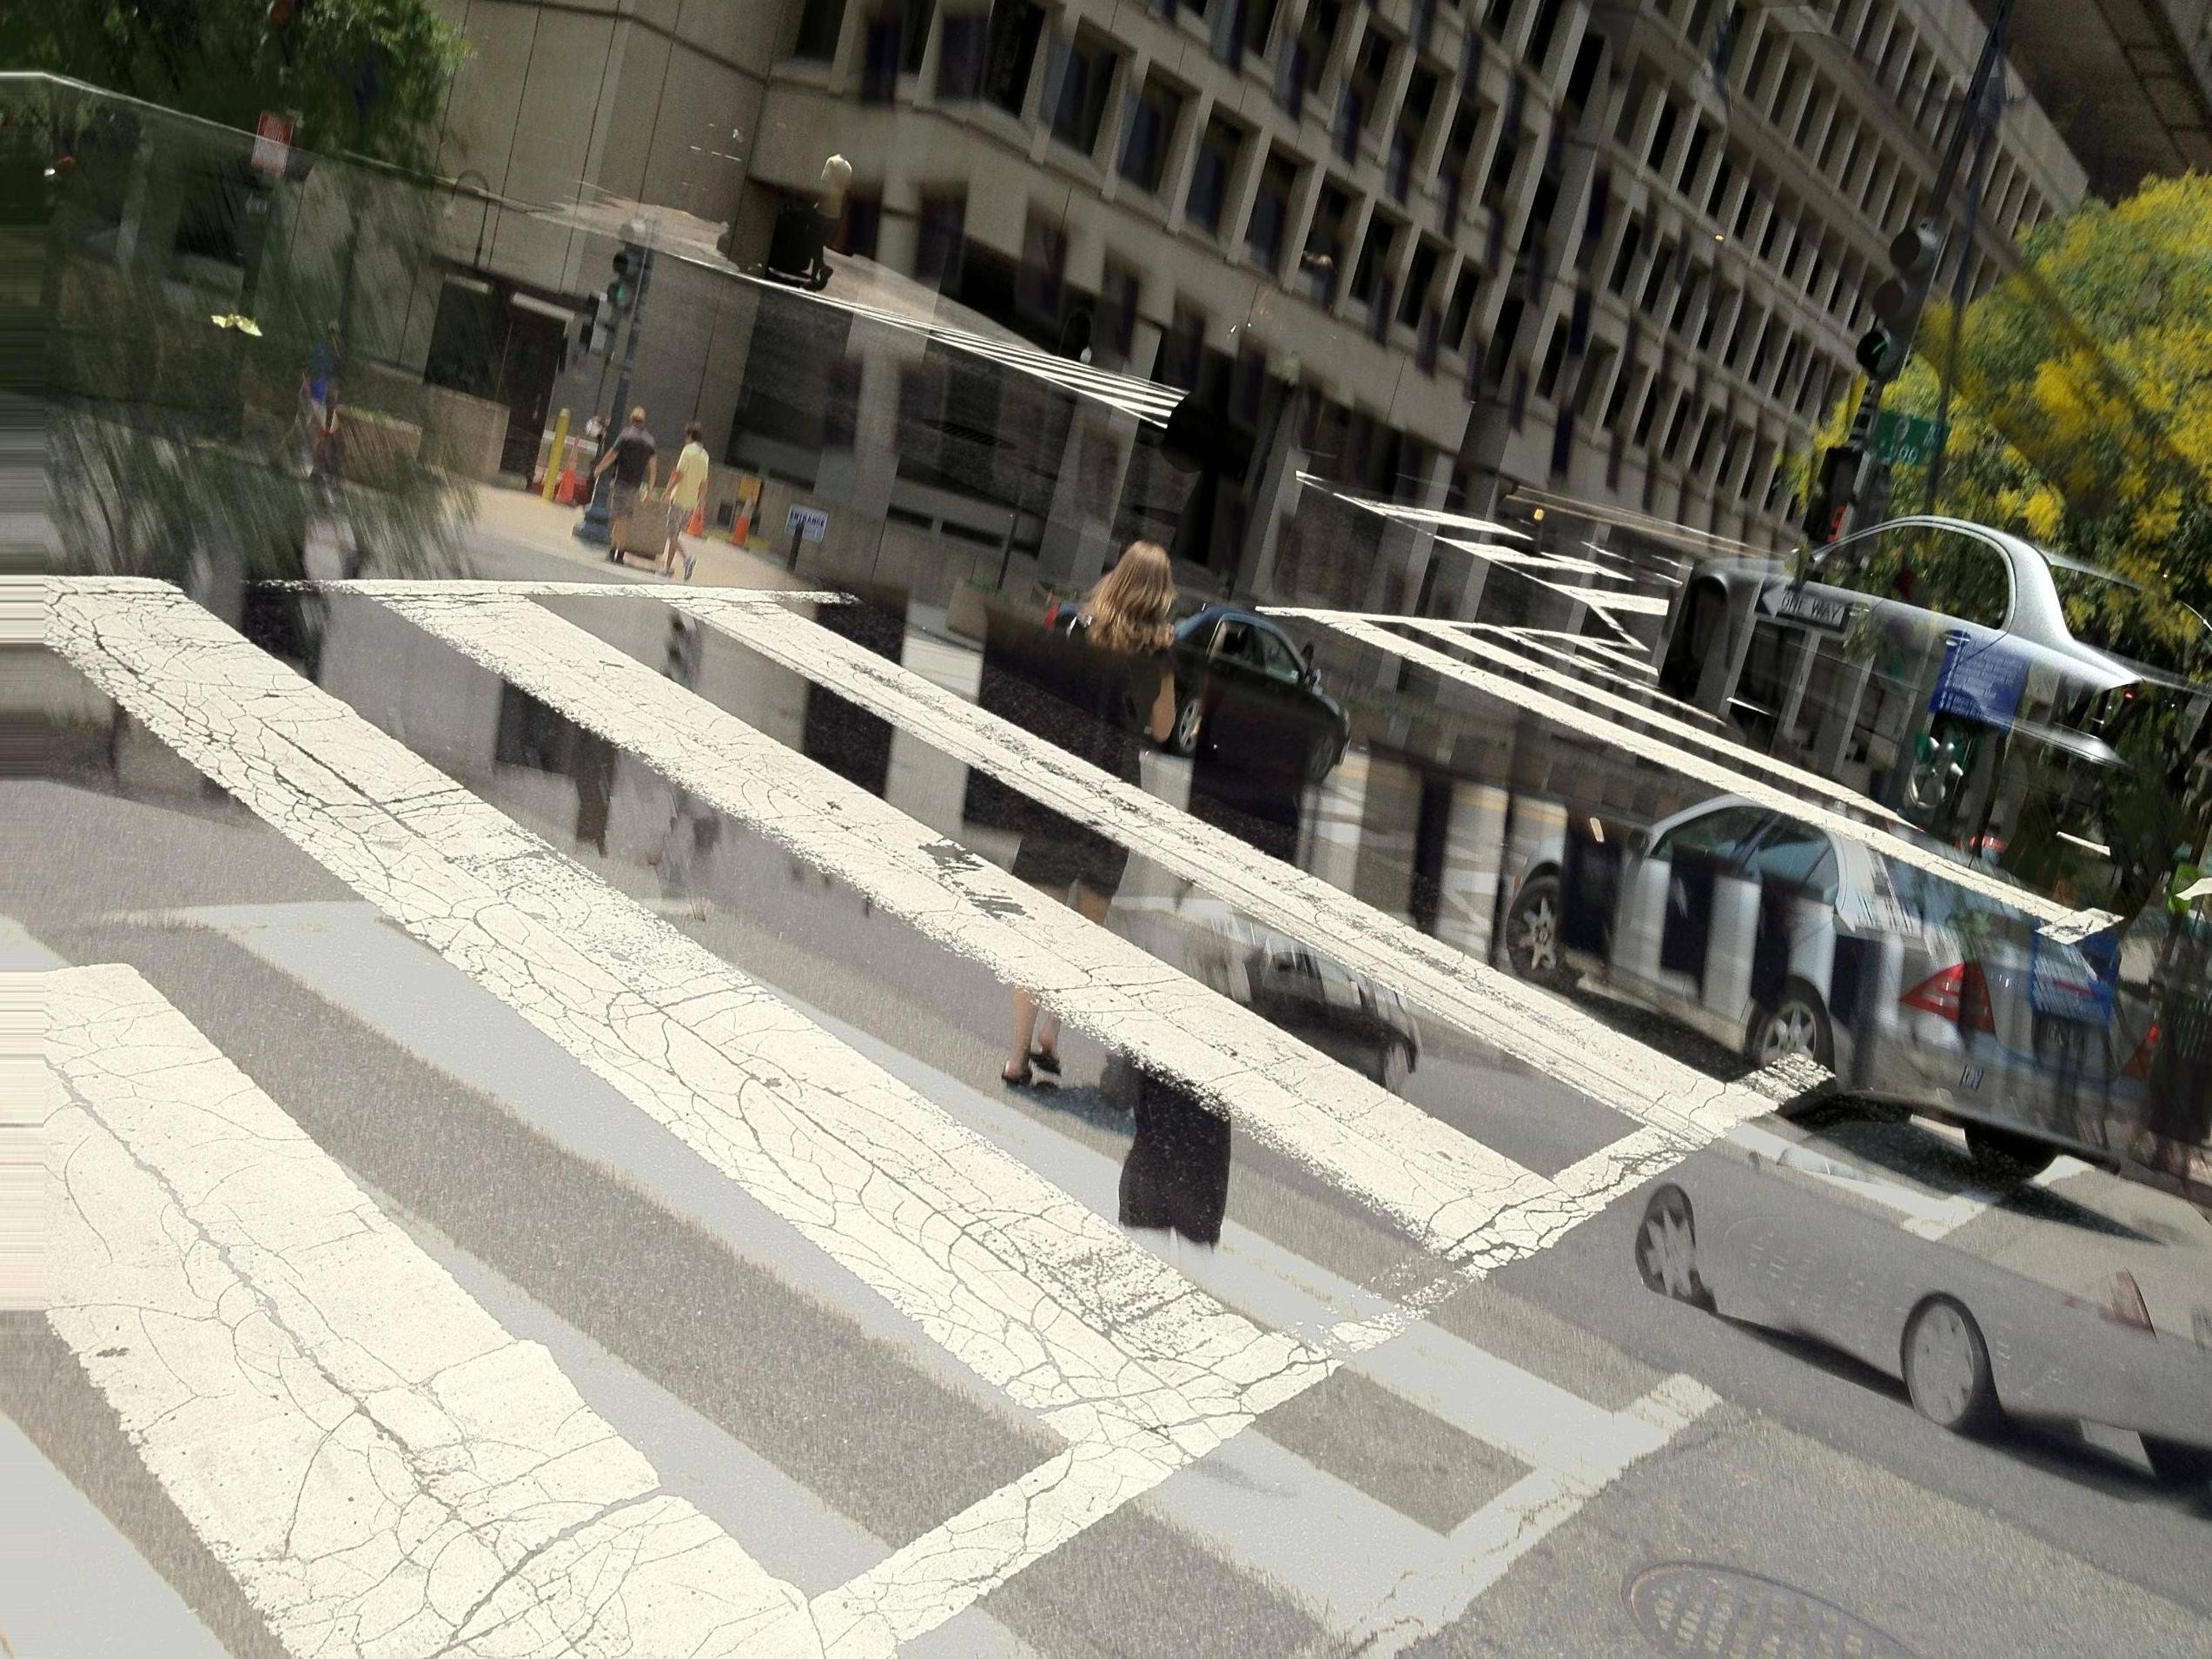 General 2546x1909 glitch art intersections city pedestrian digital art